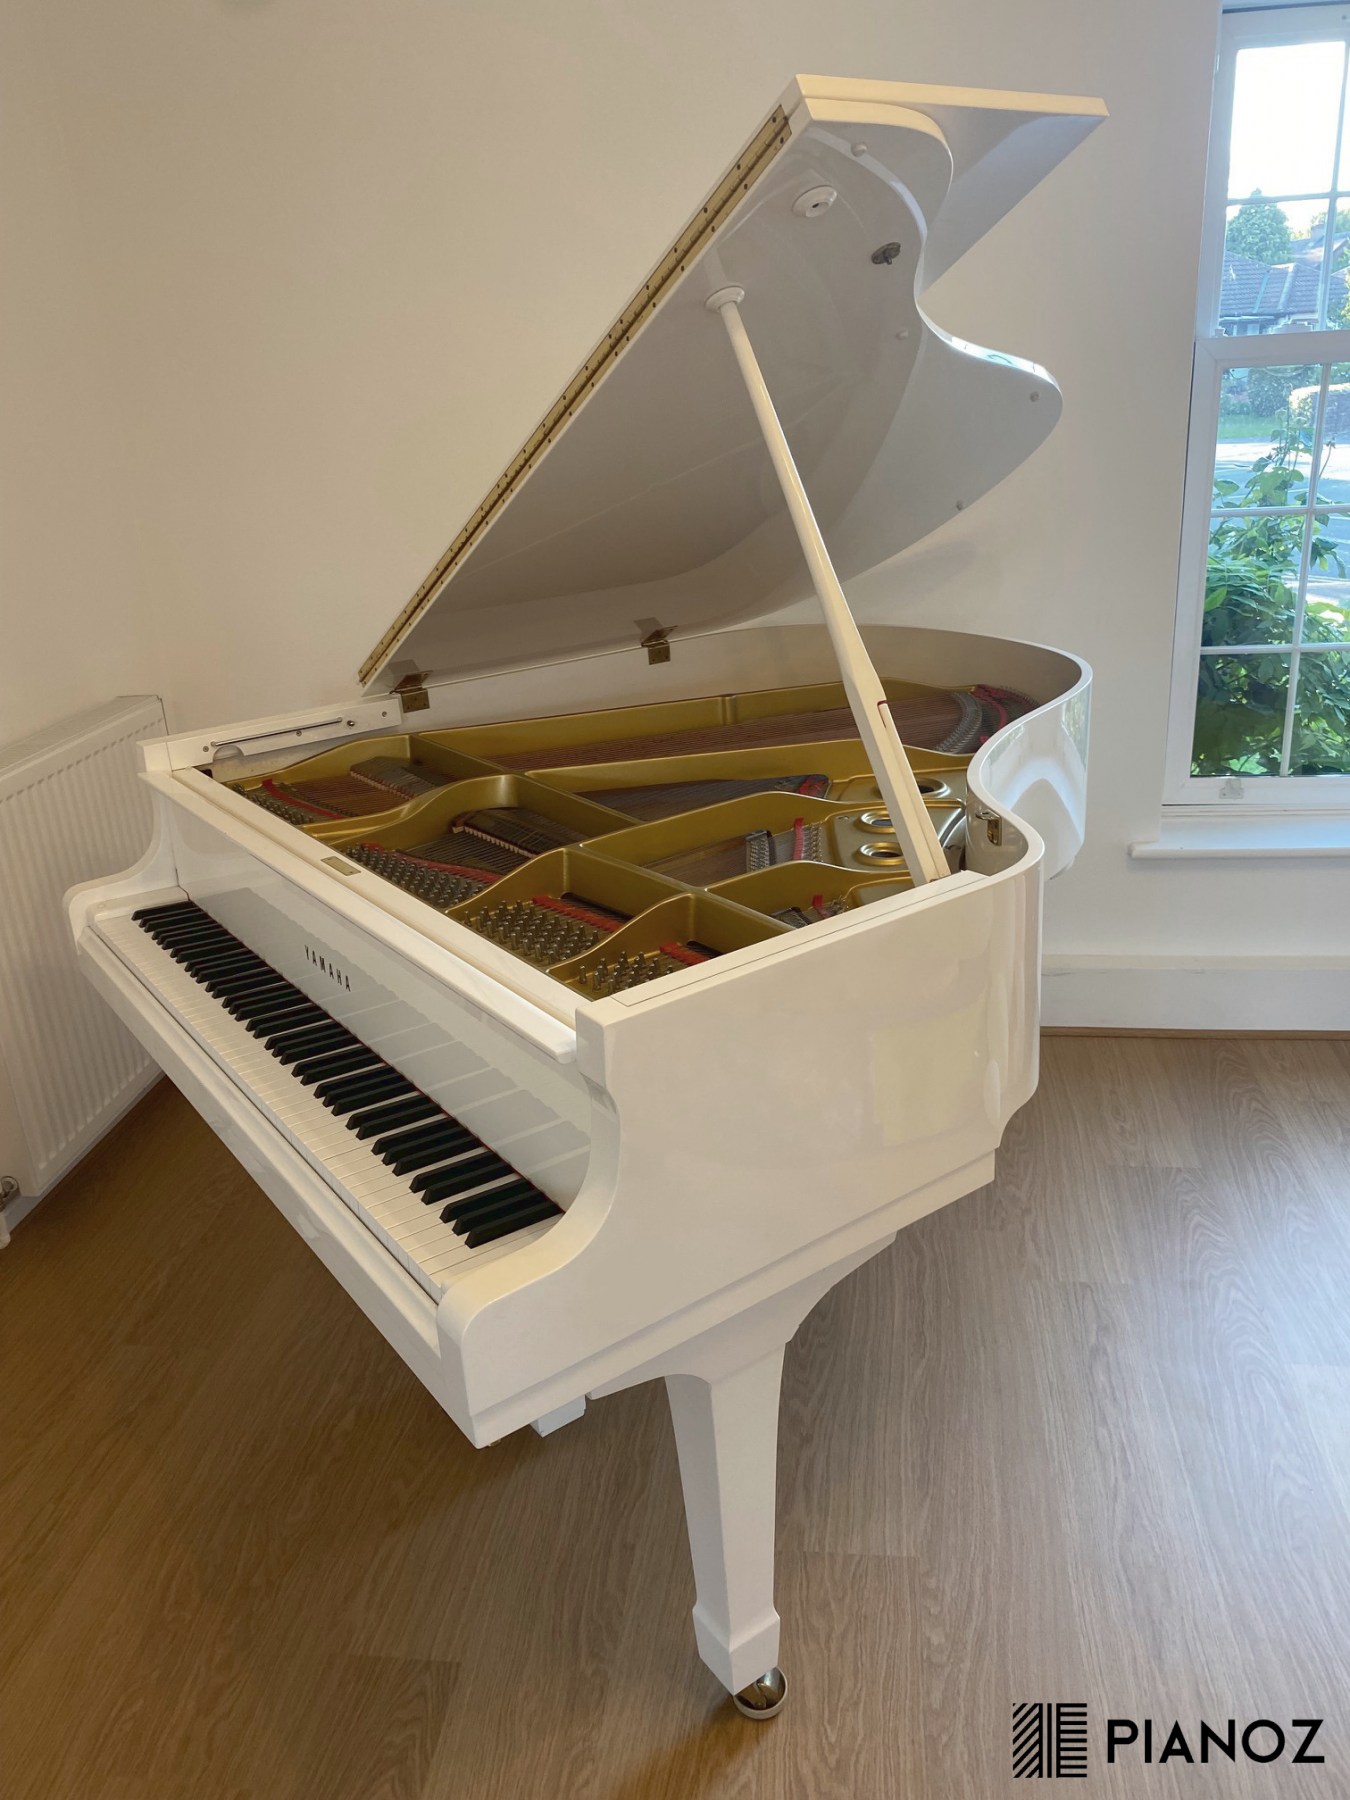 Yamaha G1 White Baby Grand Piano piano for sale in UK